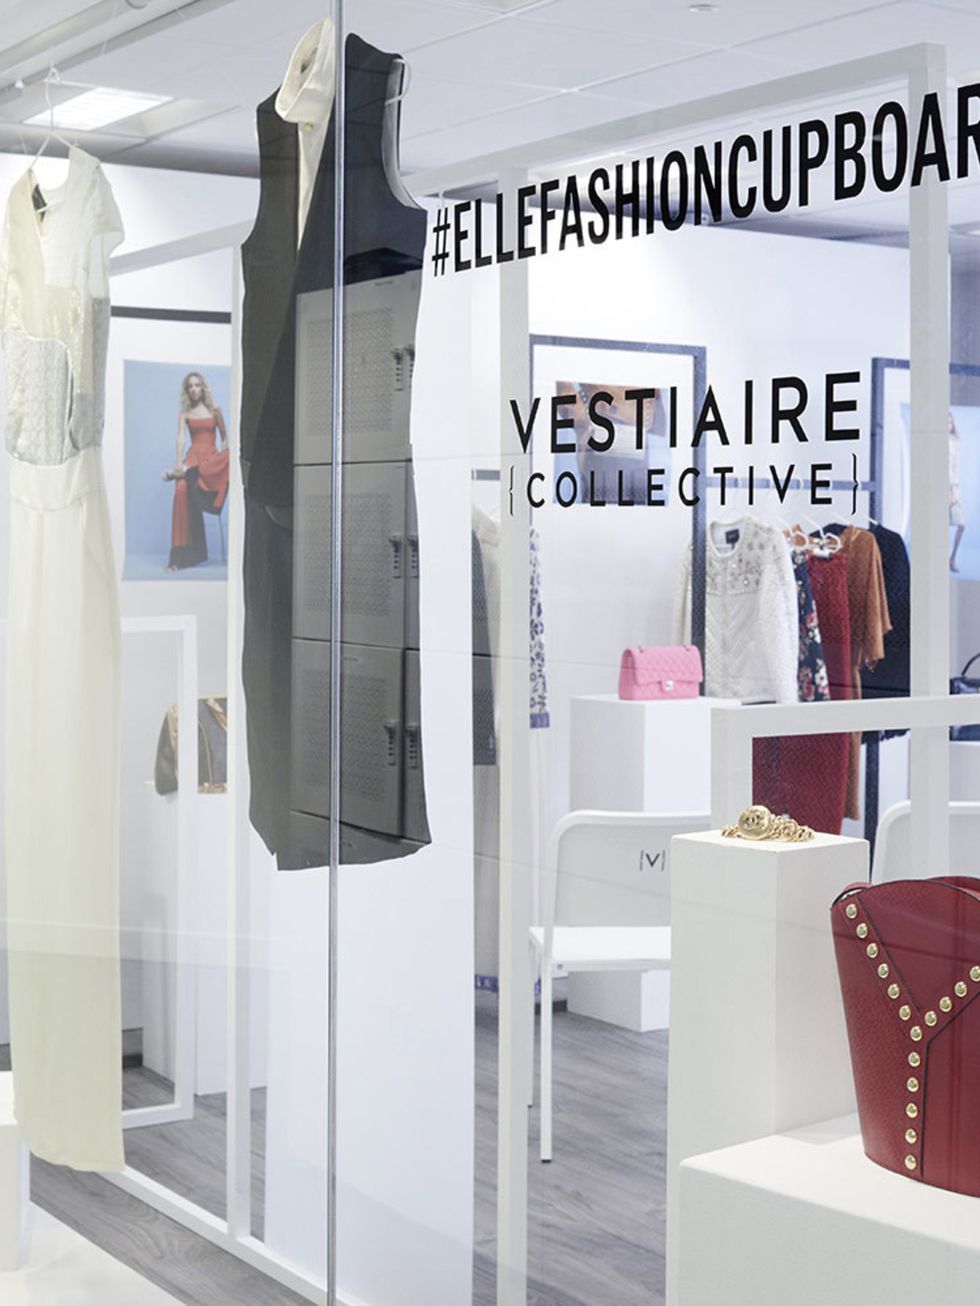 <p>Vestiaire Collective Takes Over The ELLE Fashion Cupboard</p>

<p><a href="http://www.vestiairecollective.com/women-bags/handbags/saint-laurent/black-suede-handbag-betty-saint-laurent-1687167.shtml" target="_blank">Black Suede Betty bag  Saint Laurent